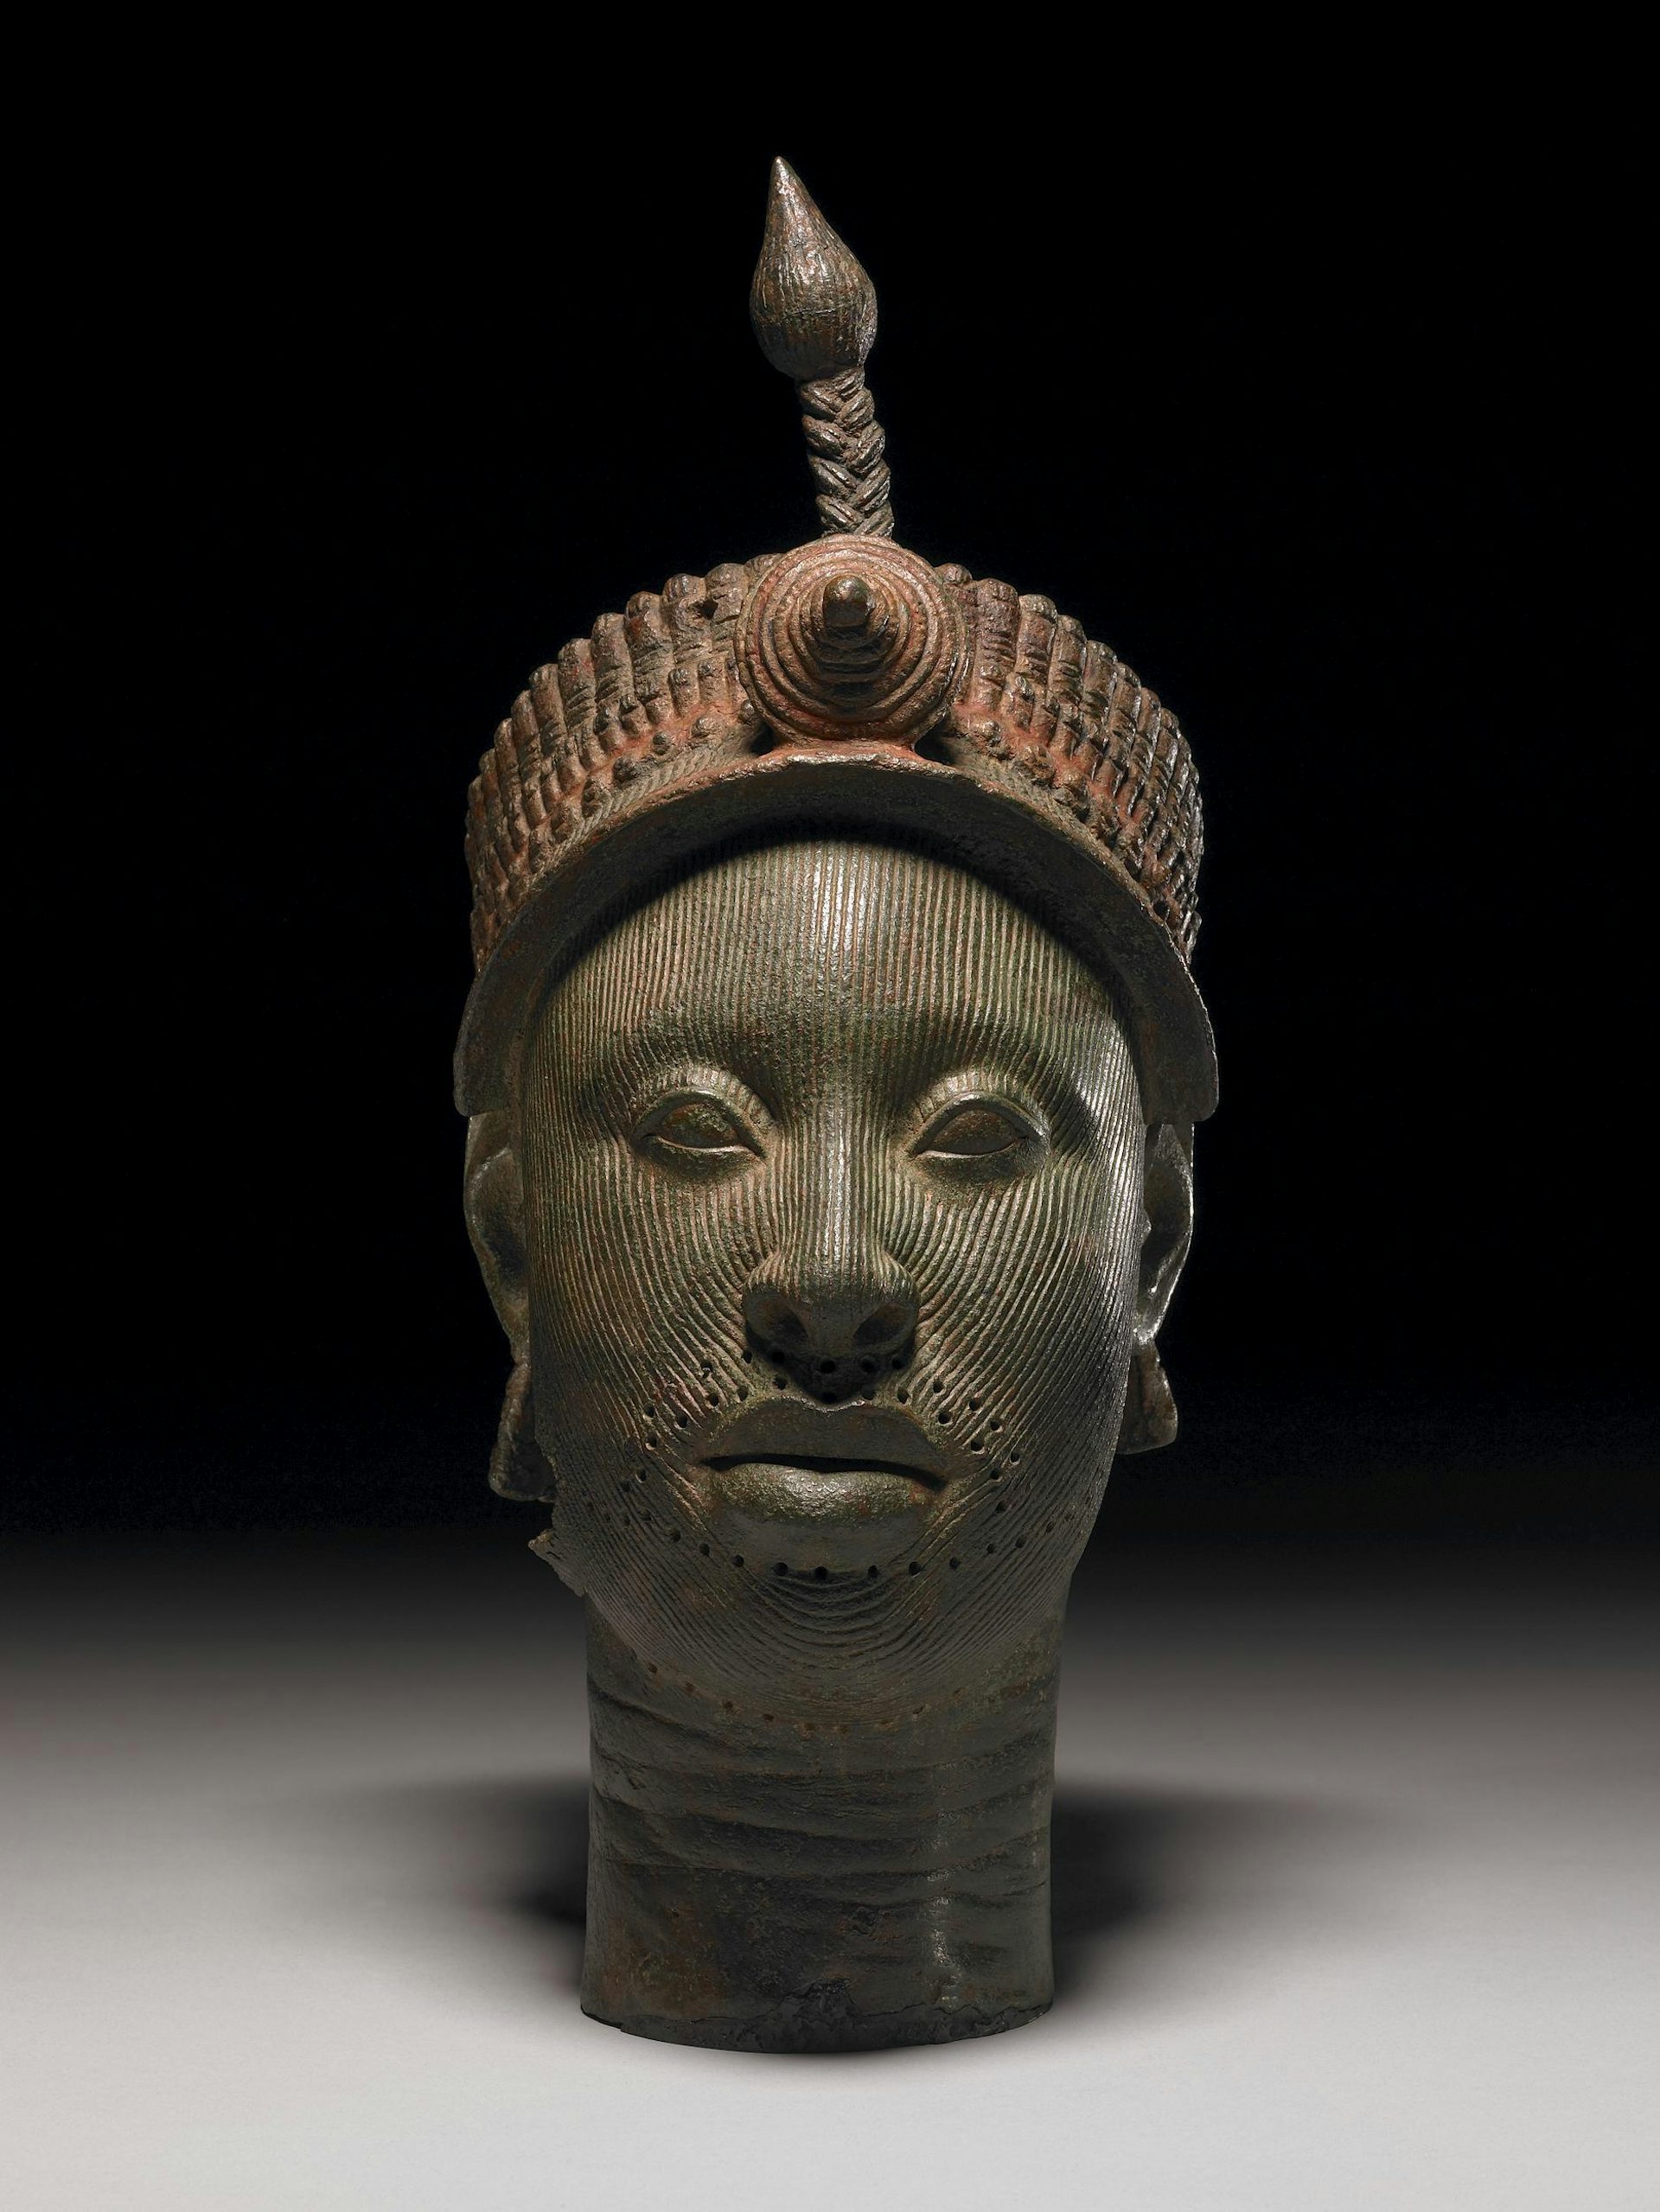 Brass Head of a Yoruba Ruler by Yoruba artist. (14th – 15th century).